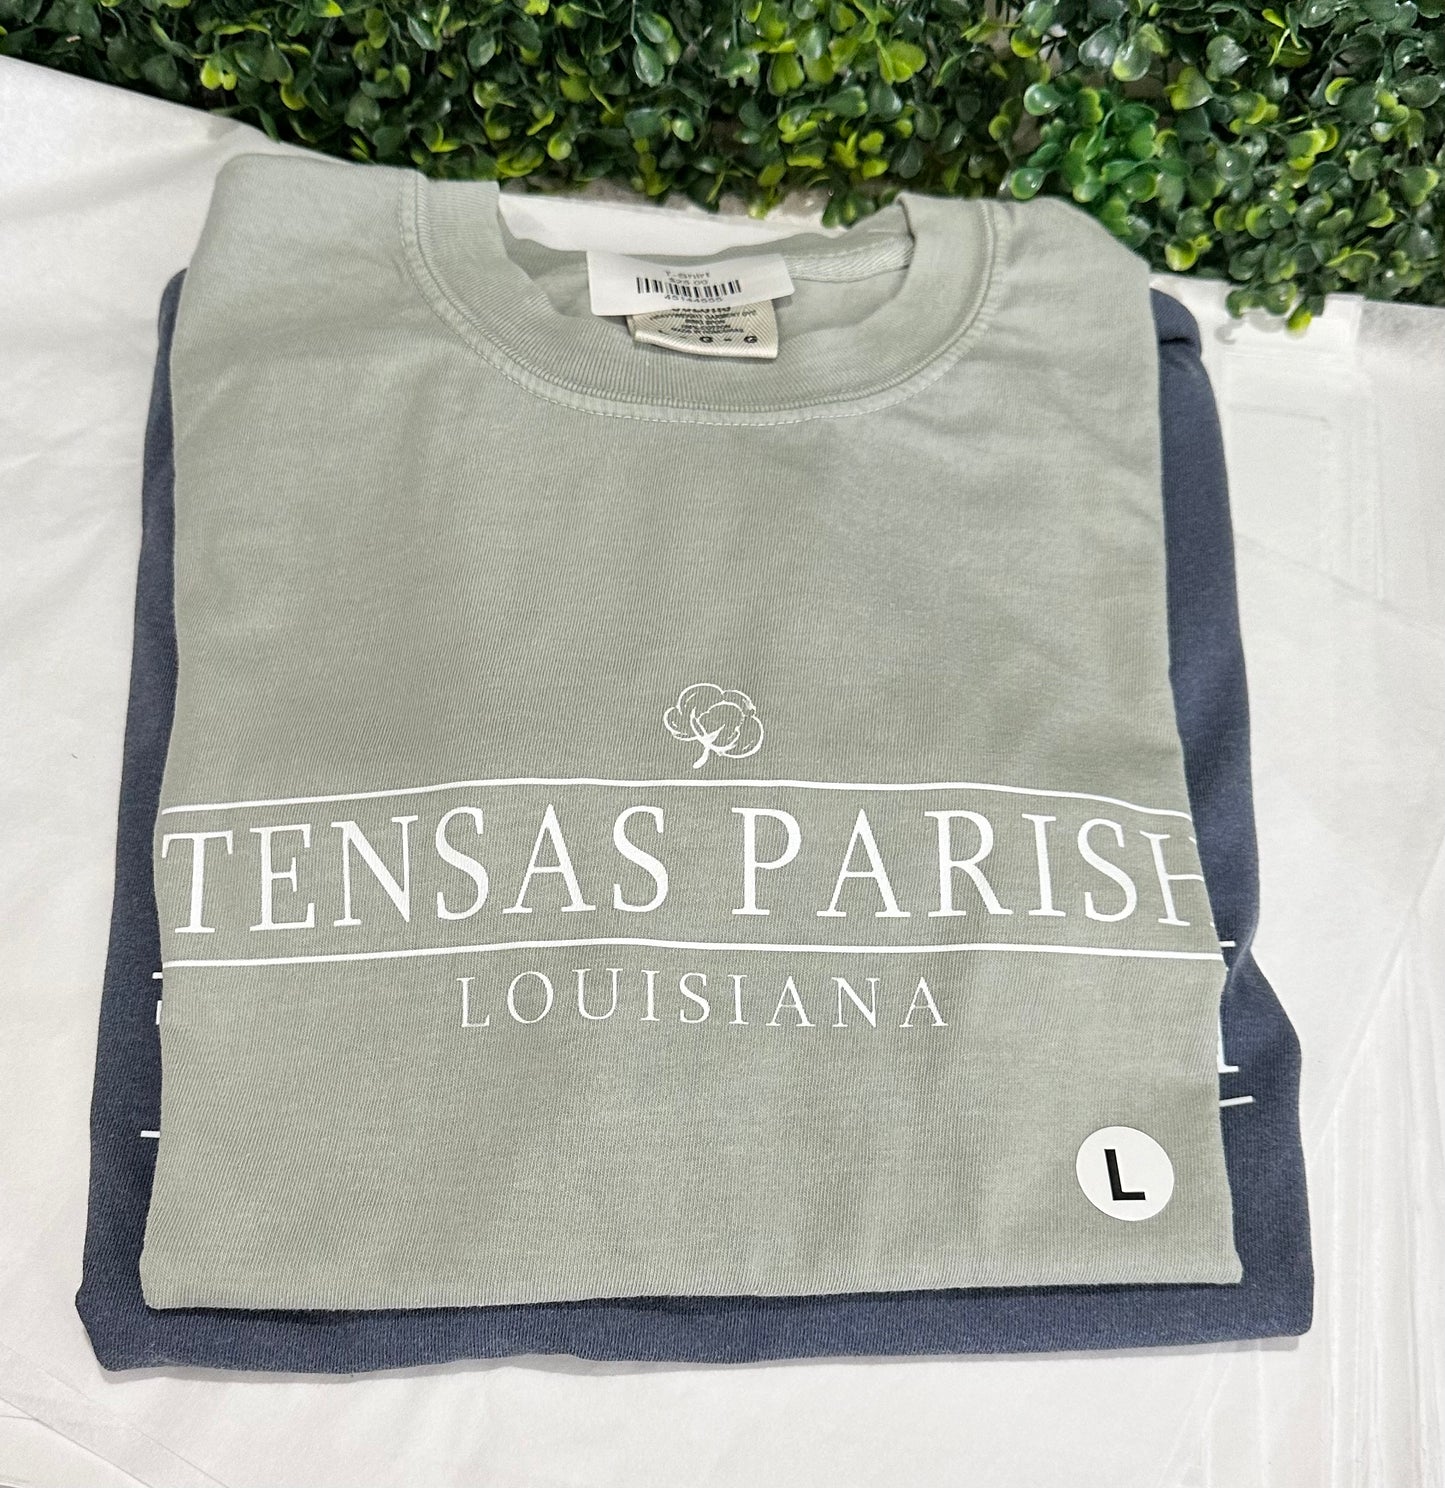 Tensas Parish on Comfort T-Shirt